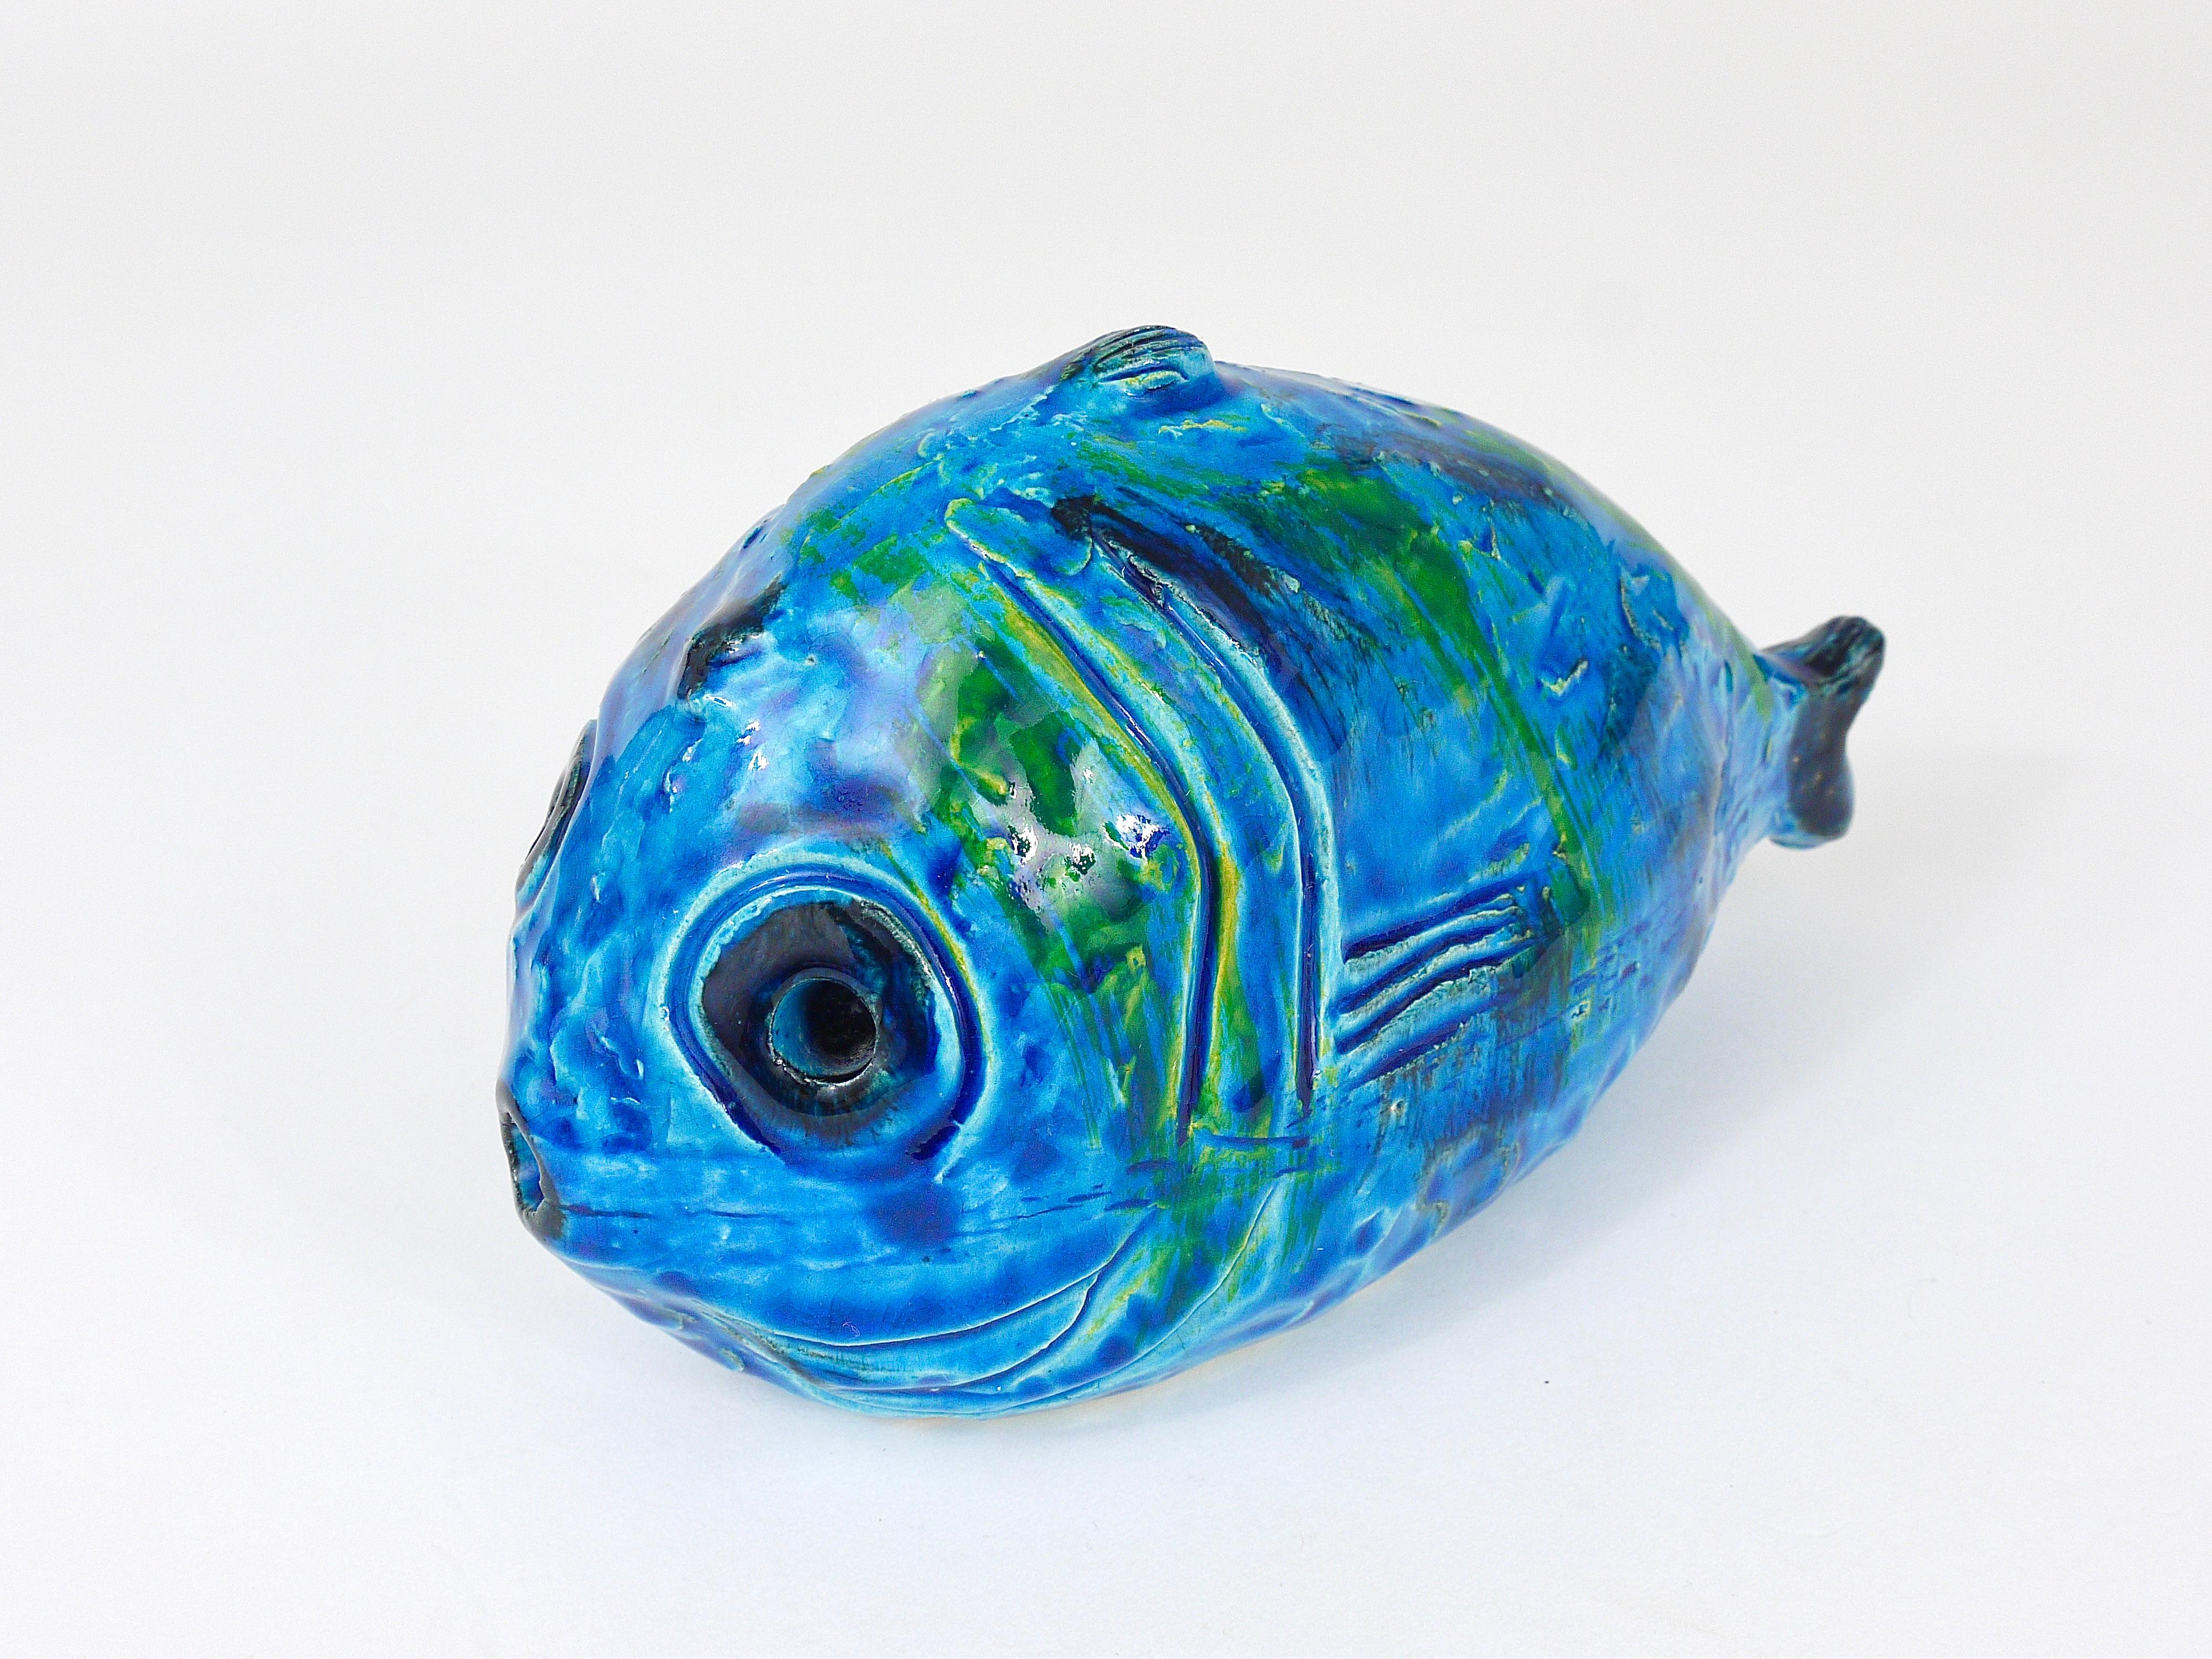 Aldo Londi Bitossi Rimini Blue Glazed Fish Sculpture Figurine, Italy, 1950s For Sale 3